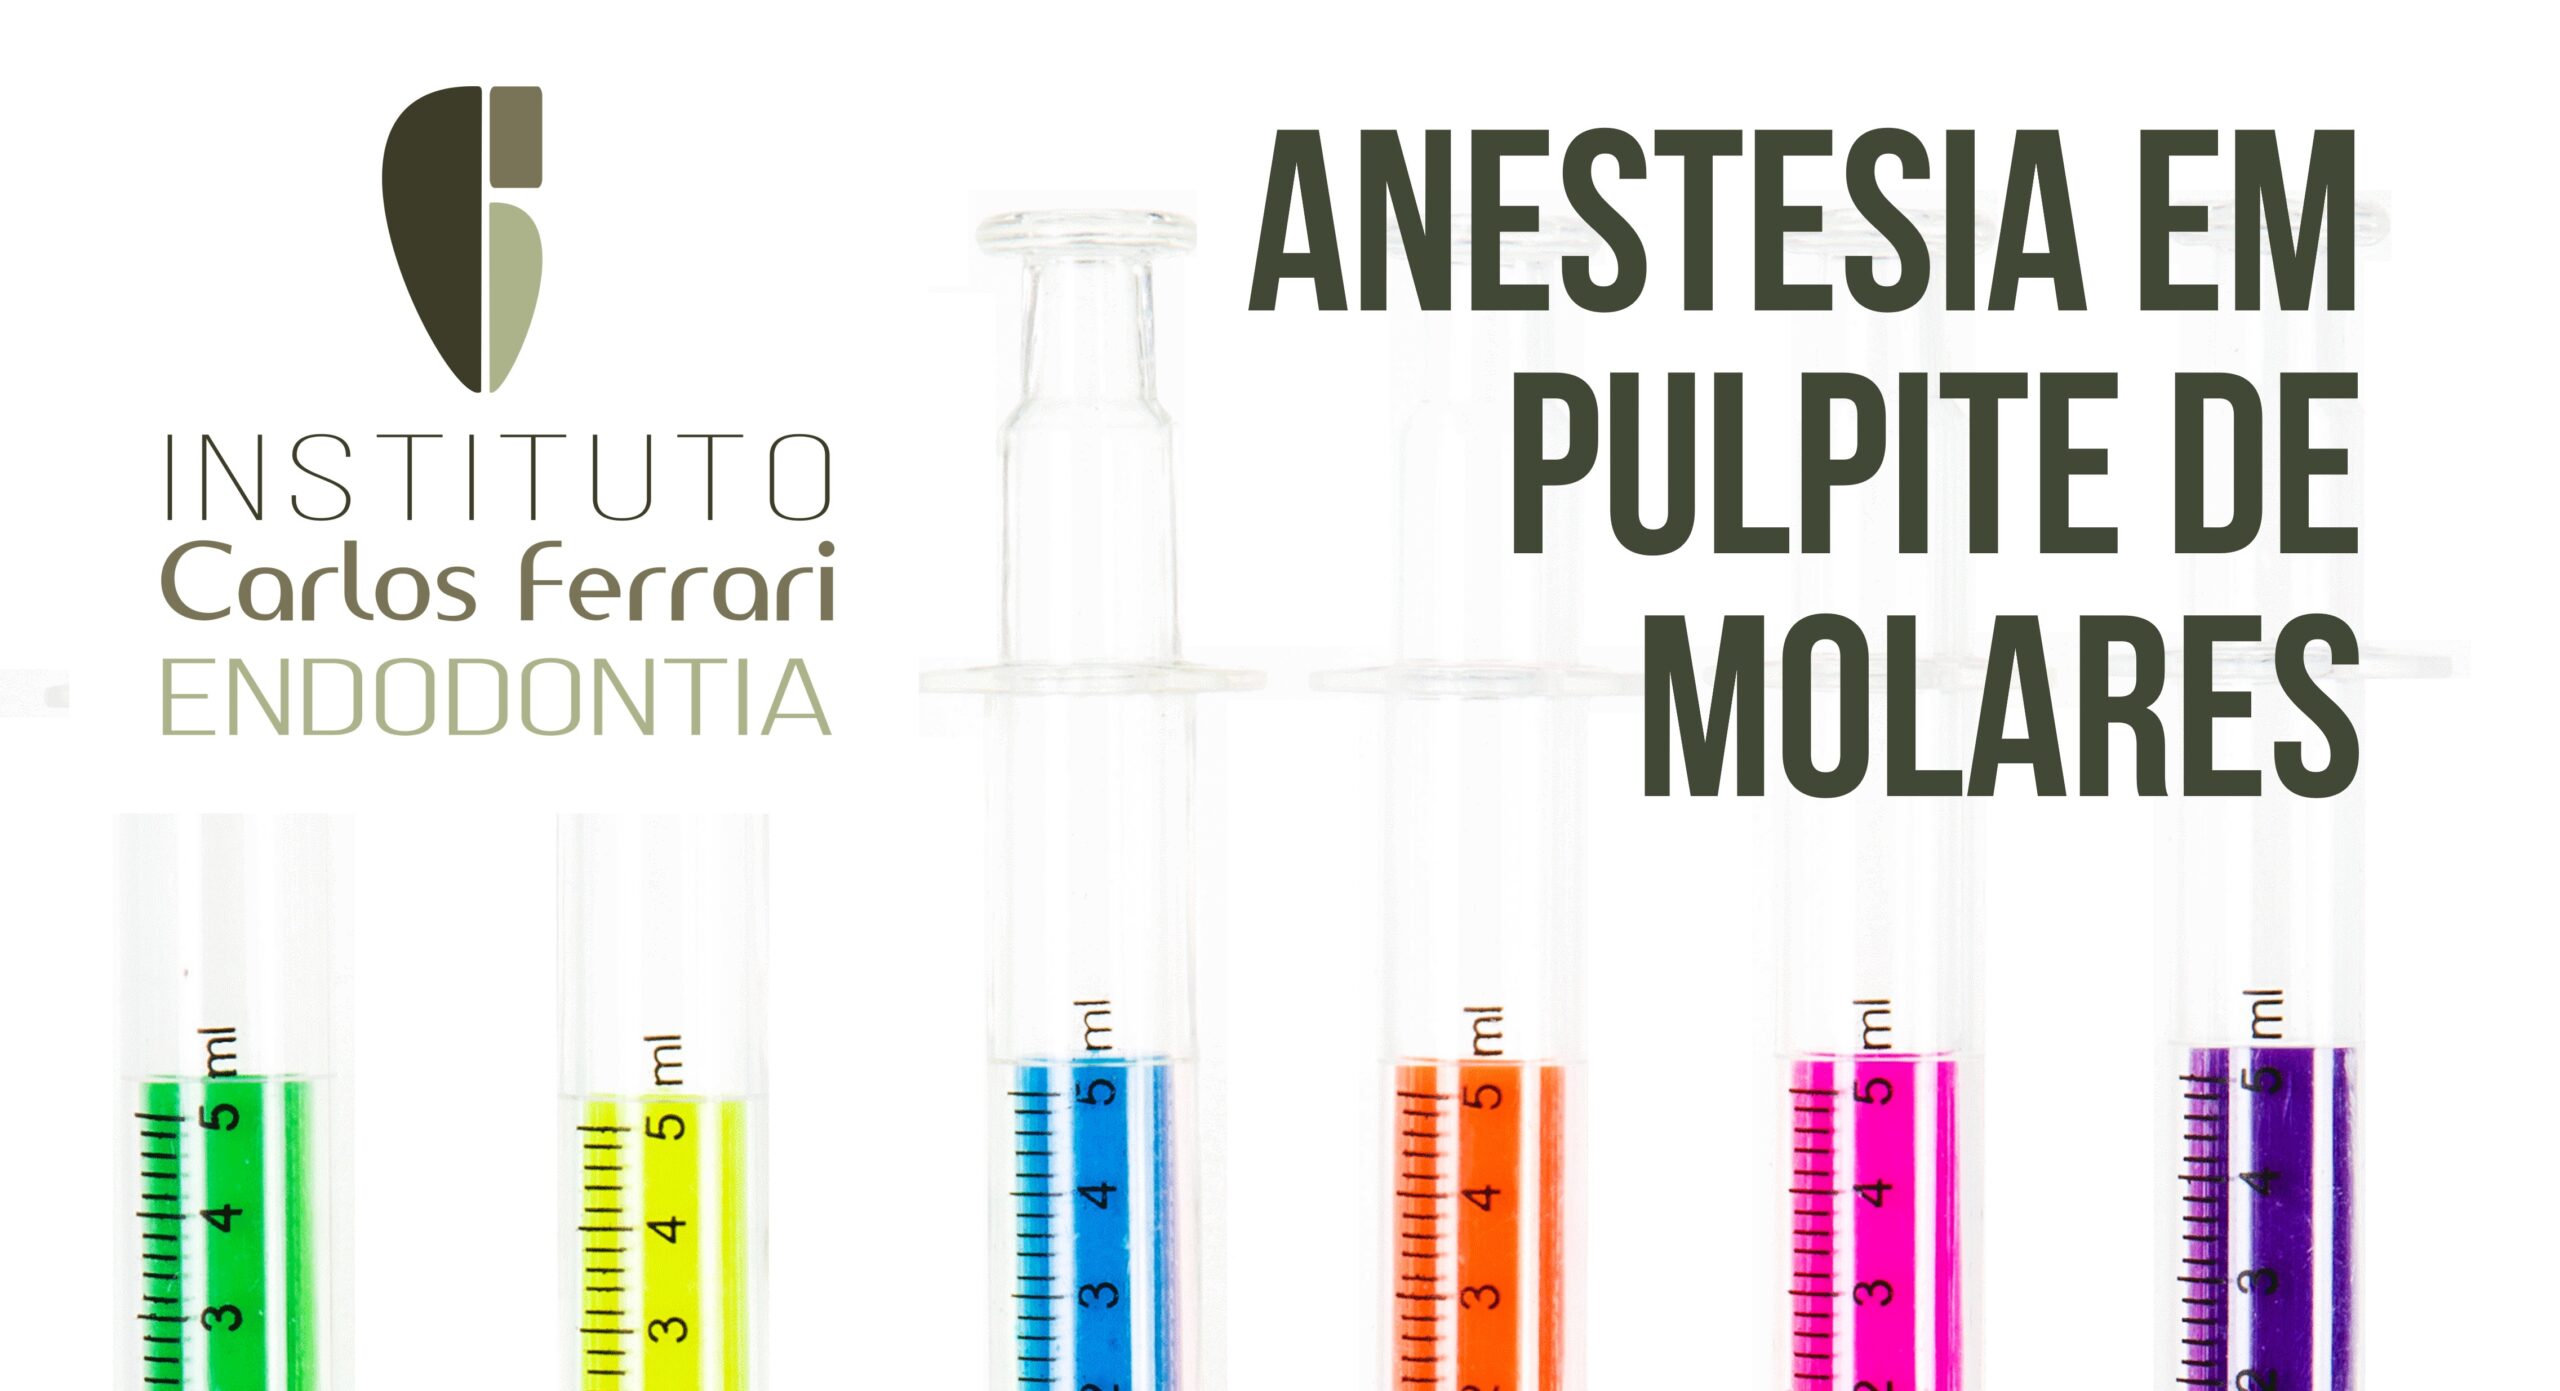 You are currently viewing Anestesia em pulpite de molares.